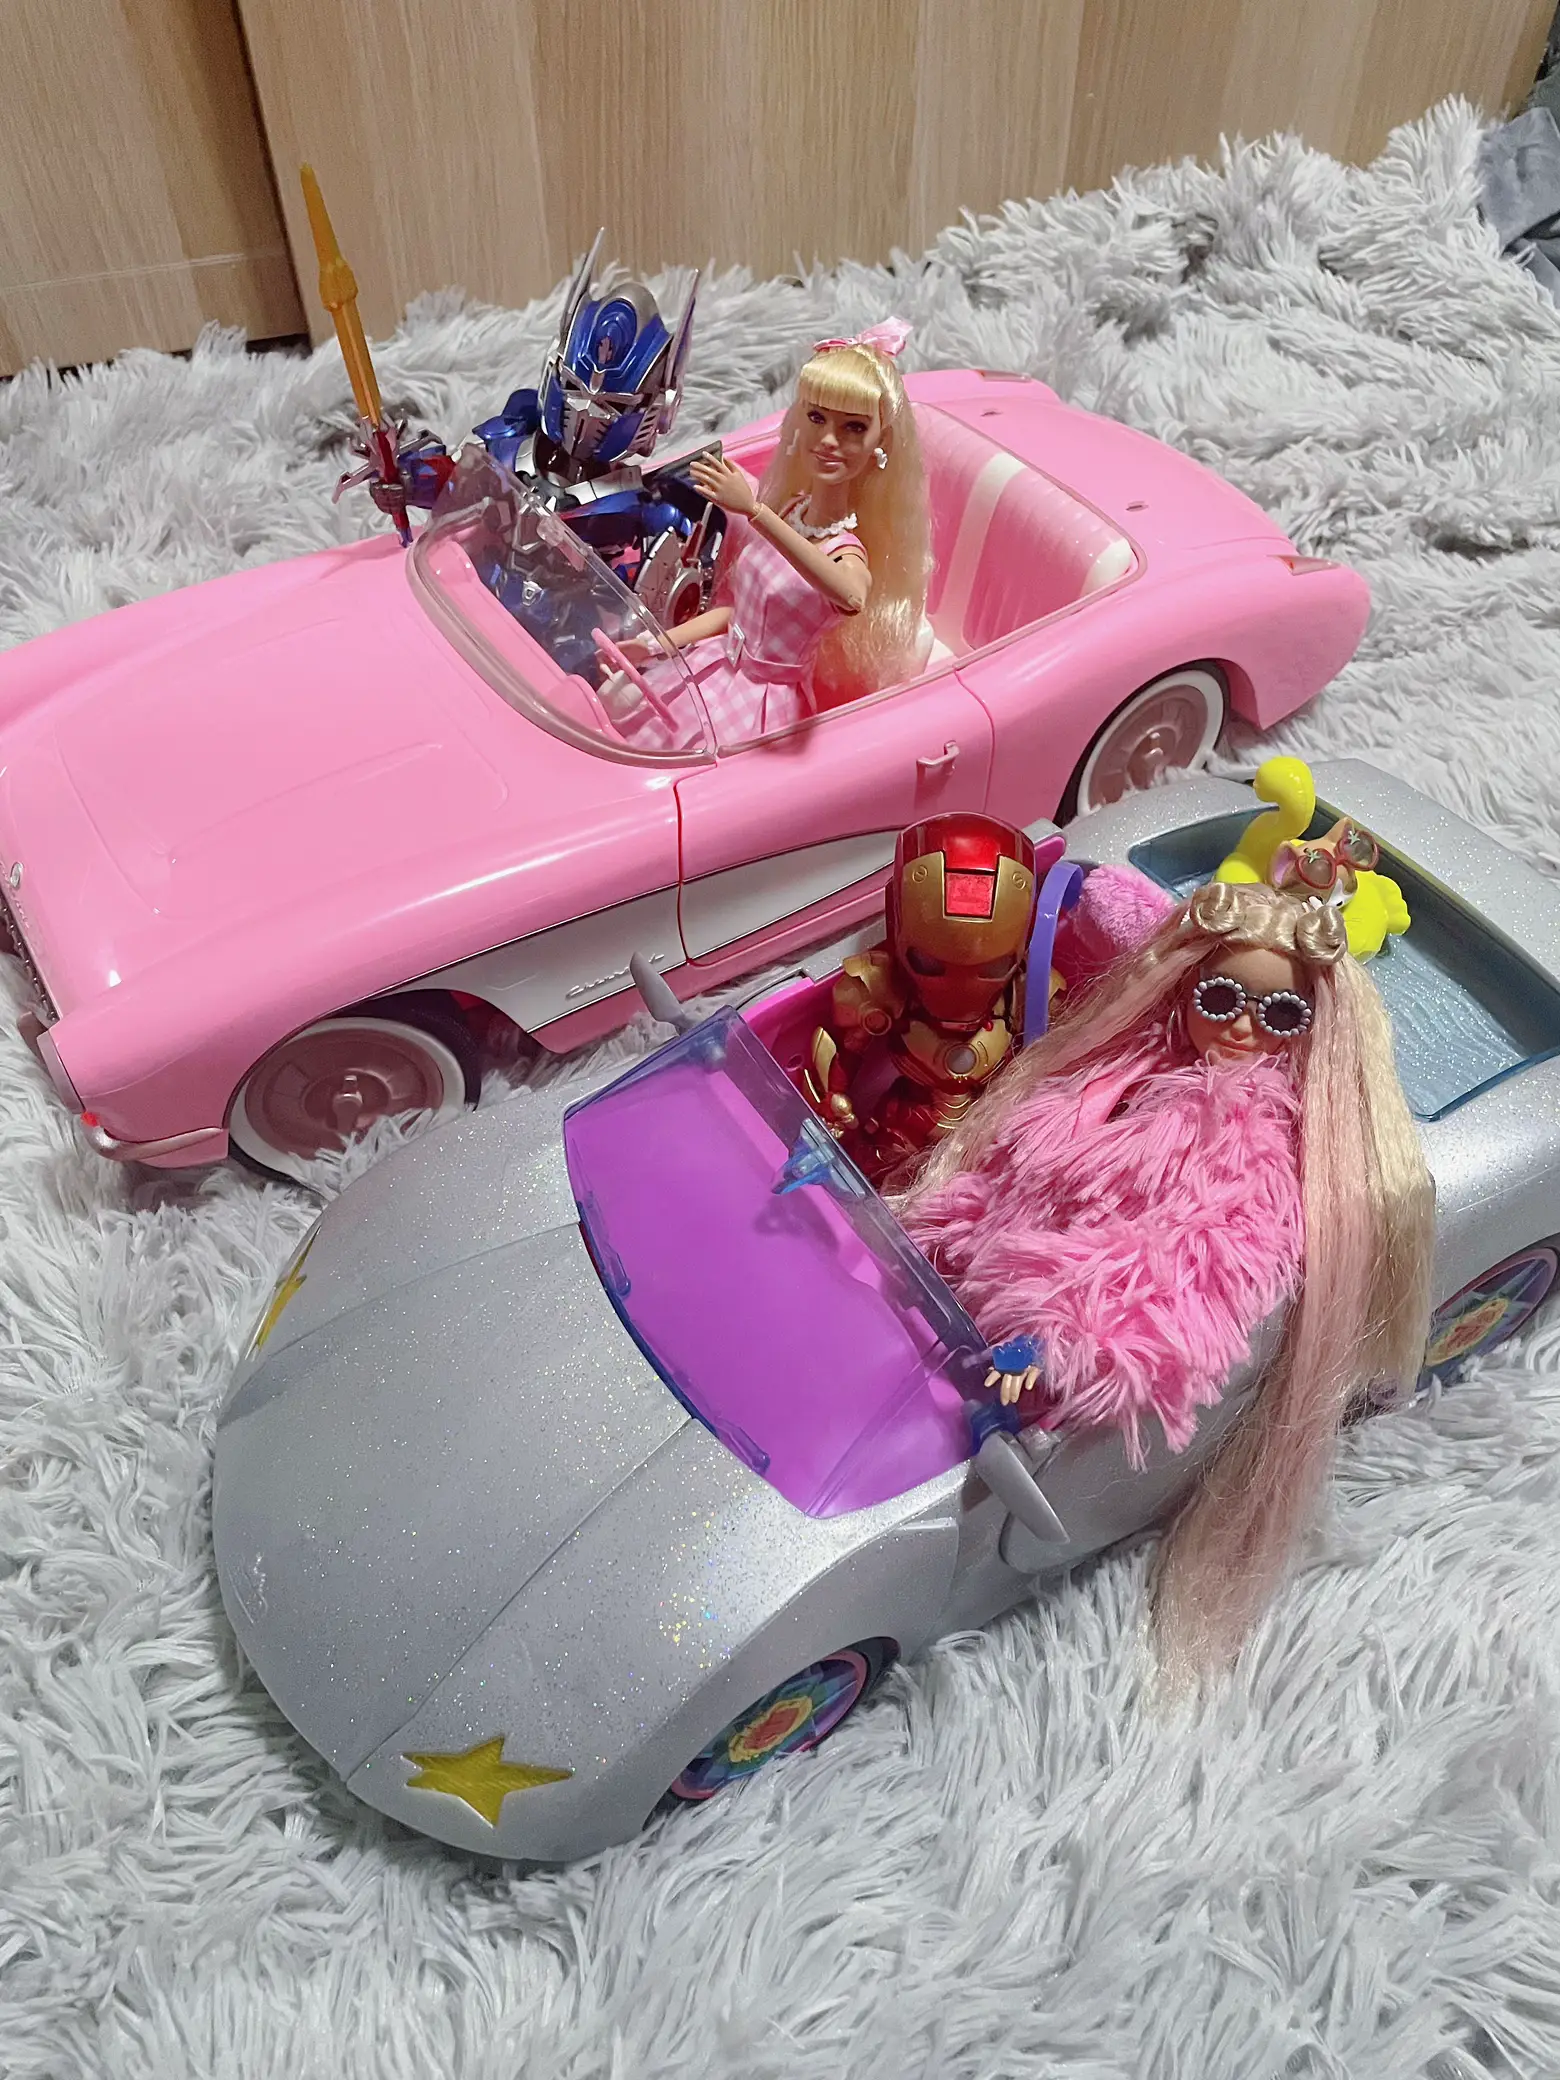 Barbie Dolls for Sick Kids - Lemon8 Search